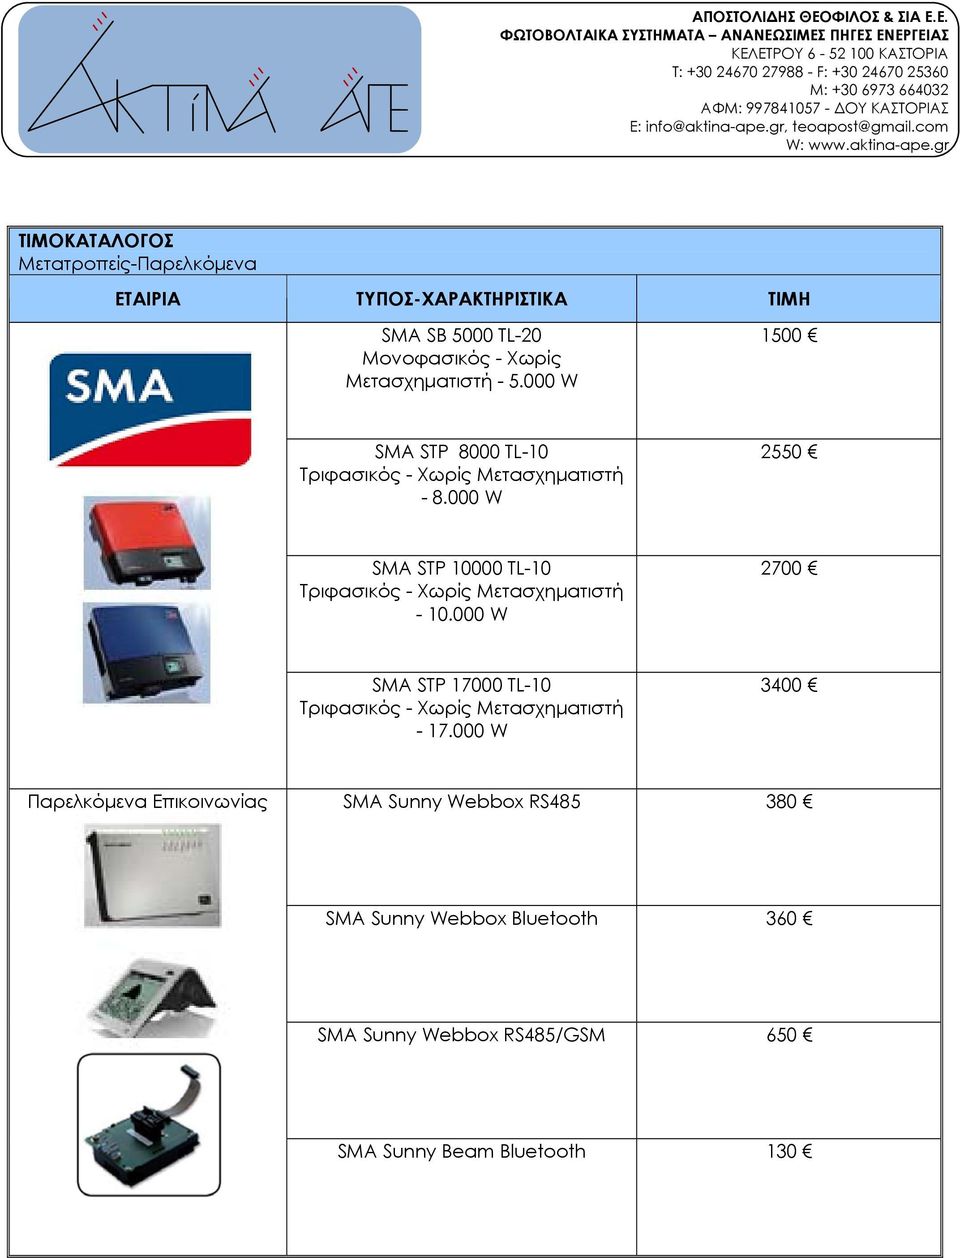 000 W 3400 Παρελκόμενα Επικοινωνίας SMA Sunny Webbox RS485 380 SMA